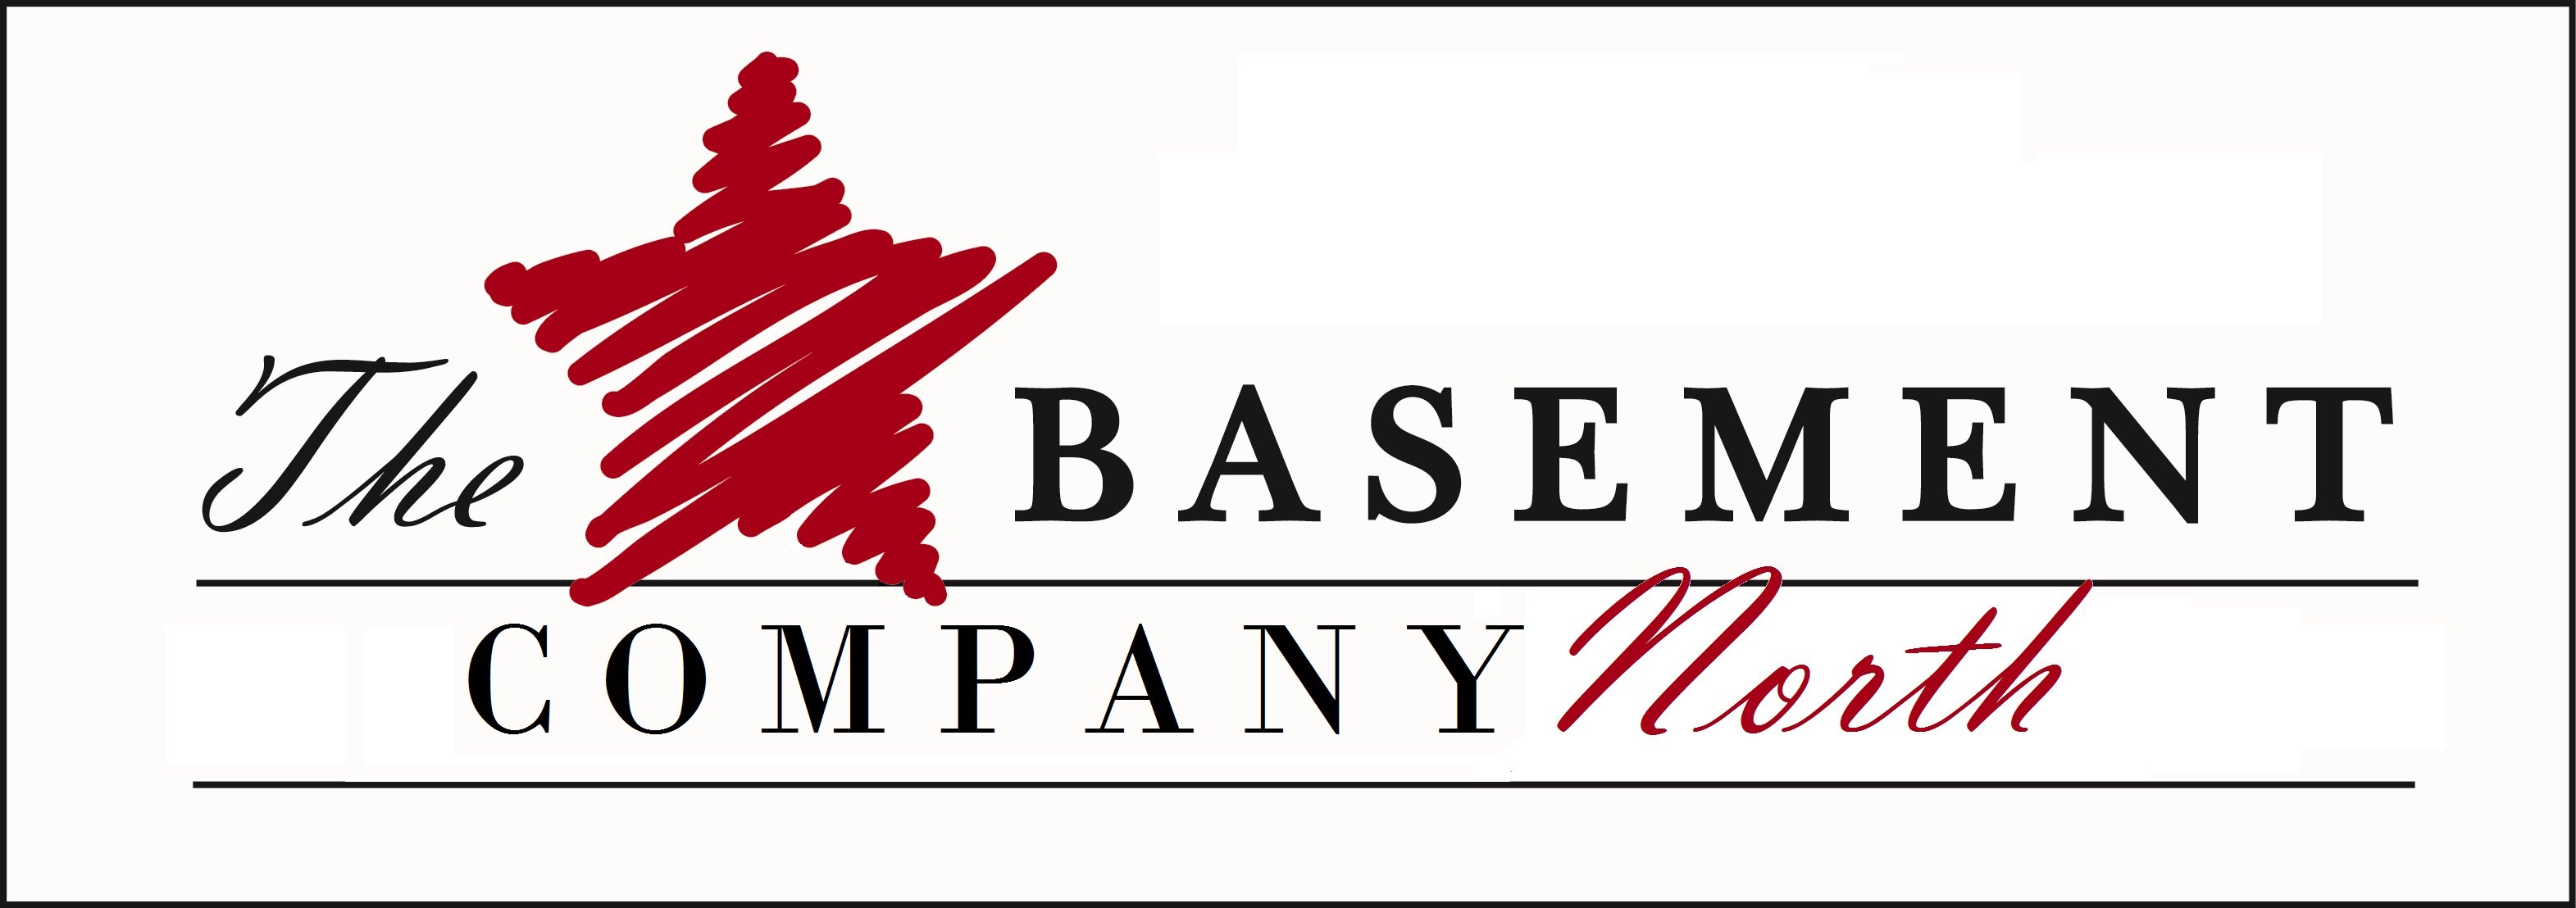 The Basement Company North Logo